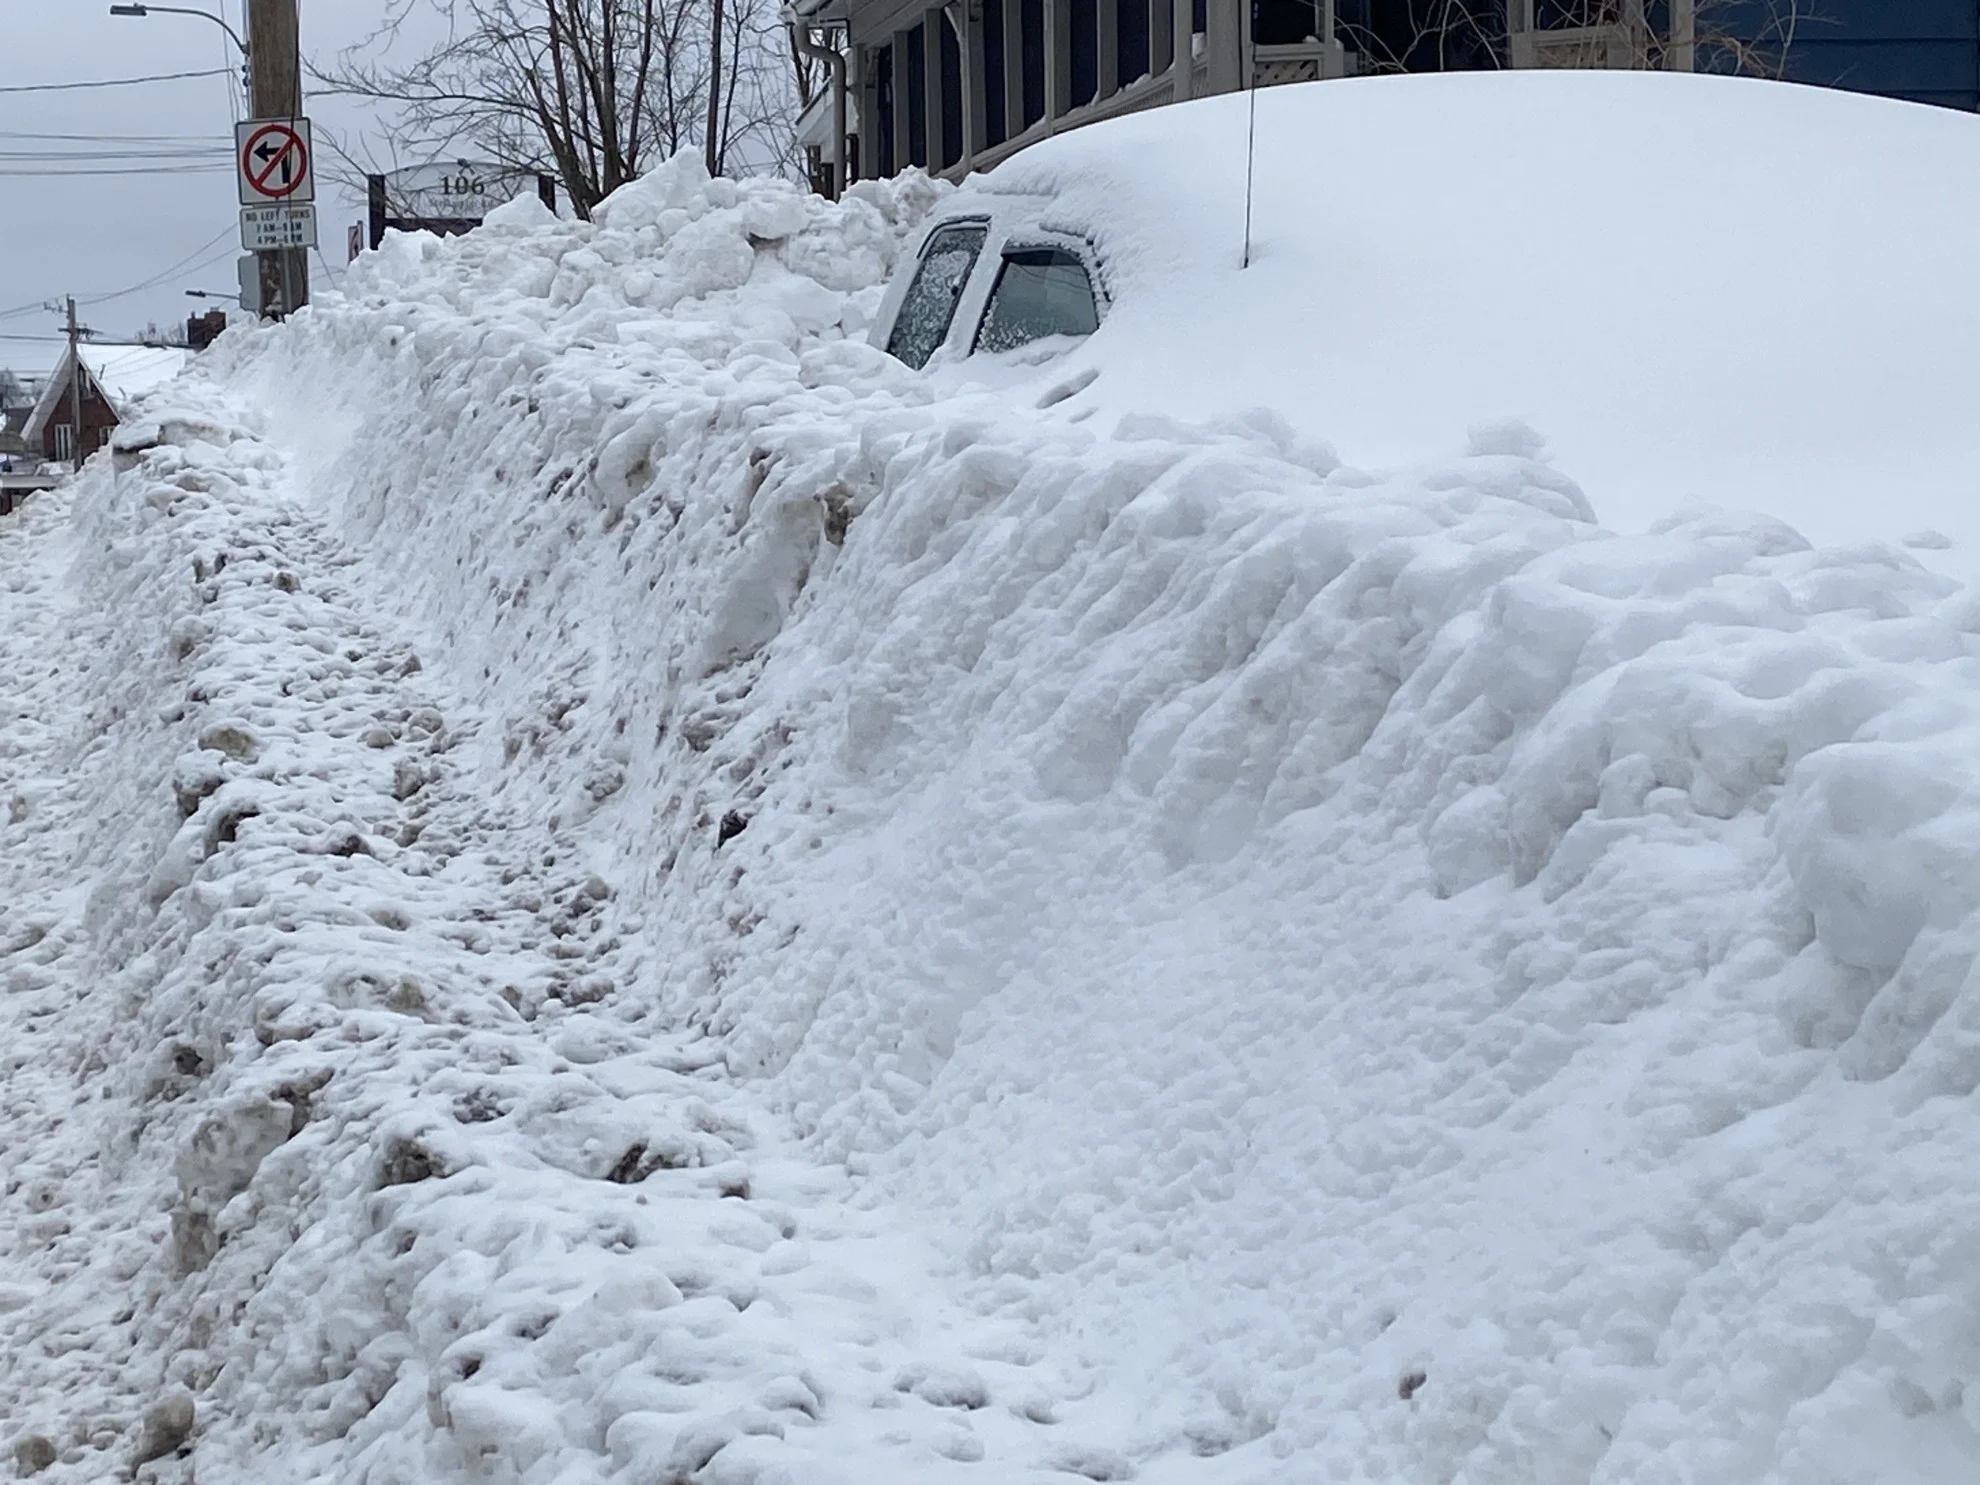 Nathan Coleman - New Glasgow Nova Scotia snow clean up - Feb 7, 2024. 1 | Car, buried, snow, winter storm, snowstorm, blizzard, snowbank, sidewalk